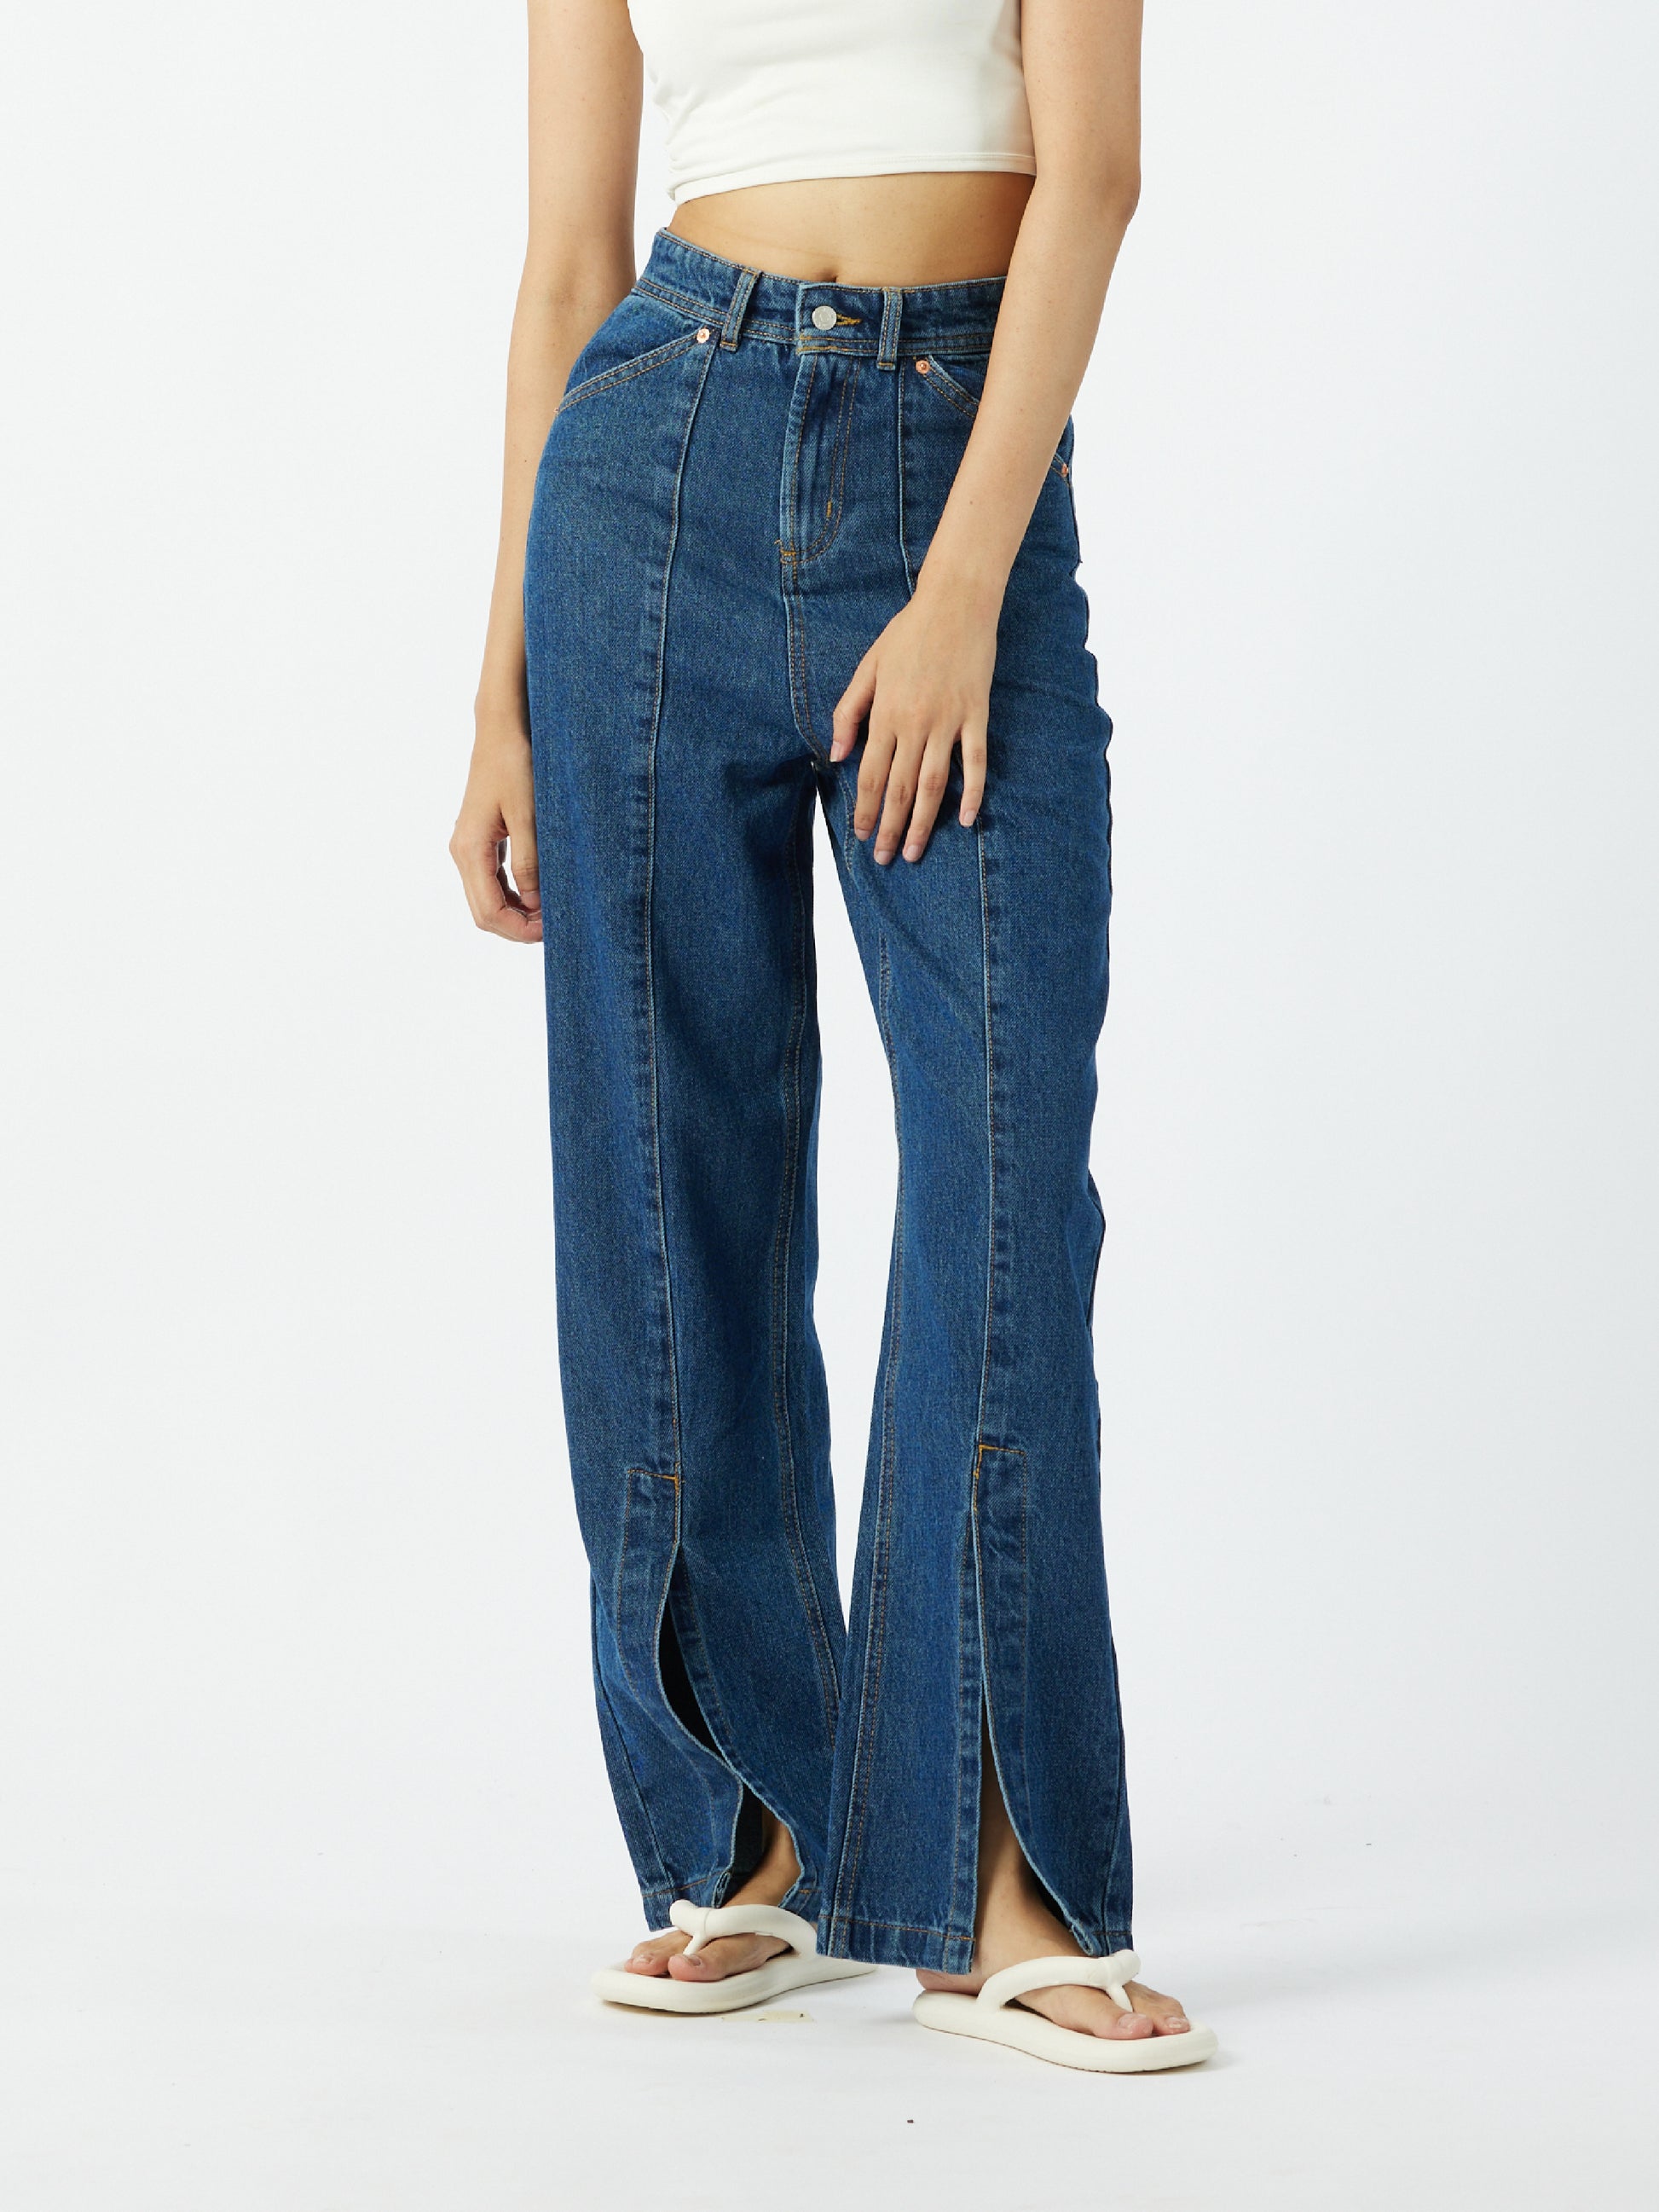 Slit jeans Woman's denim dark blue pants